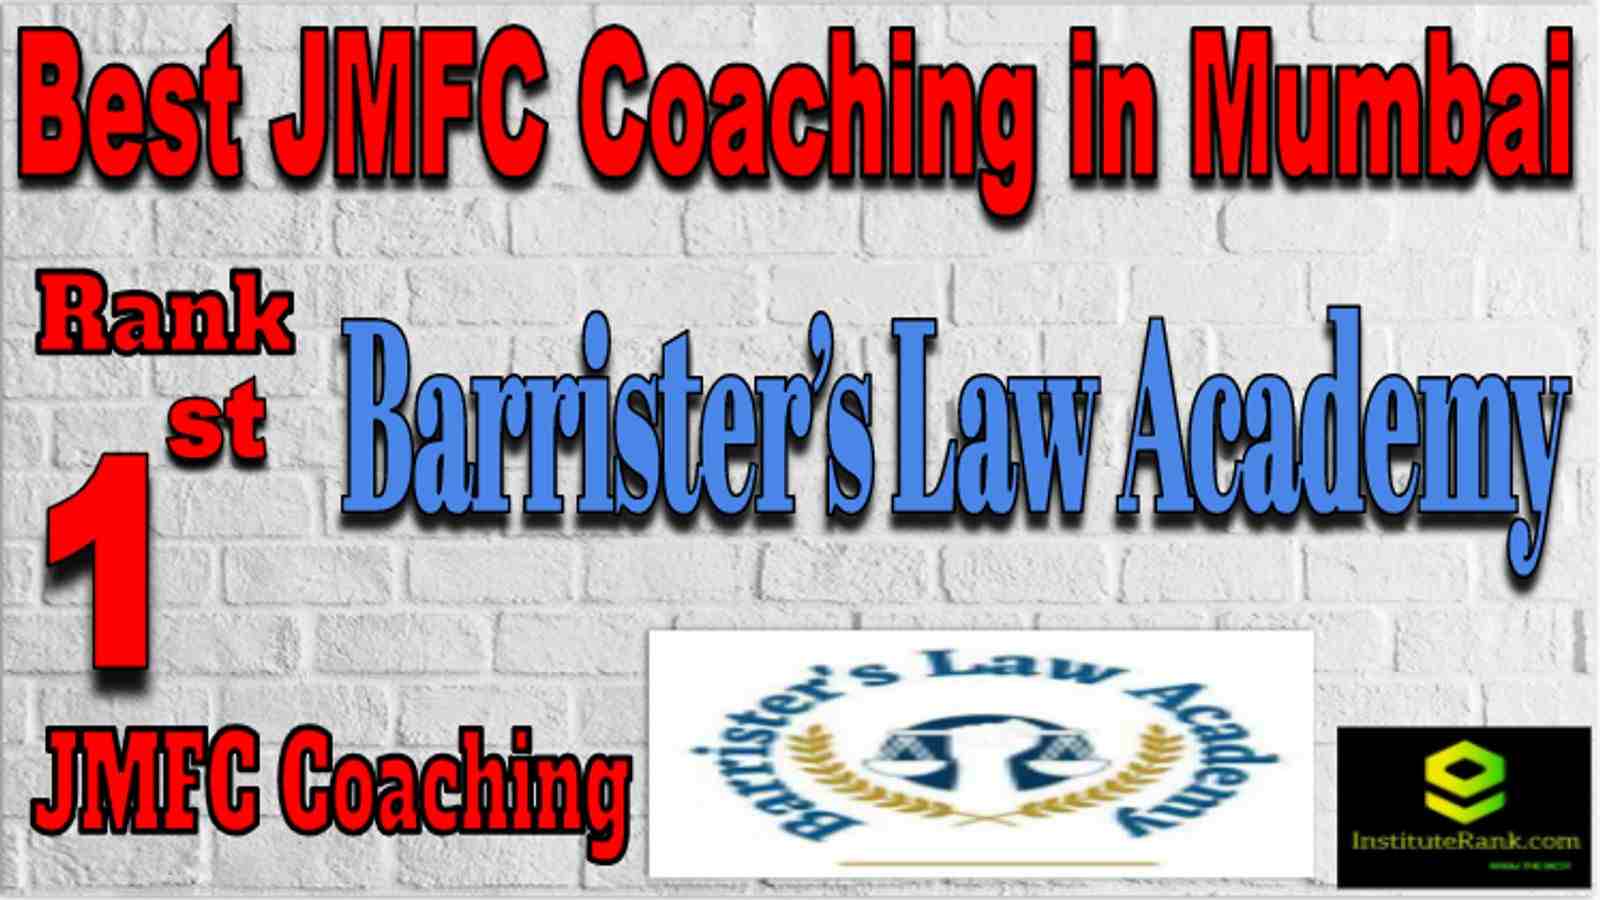 Rank 1 Best JMFC Coaching in Mumbai